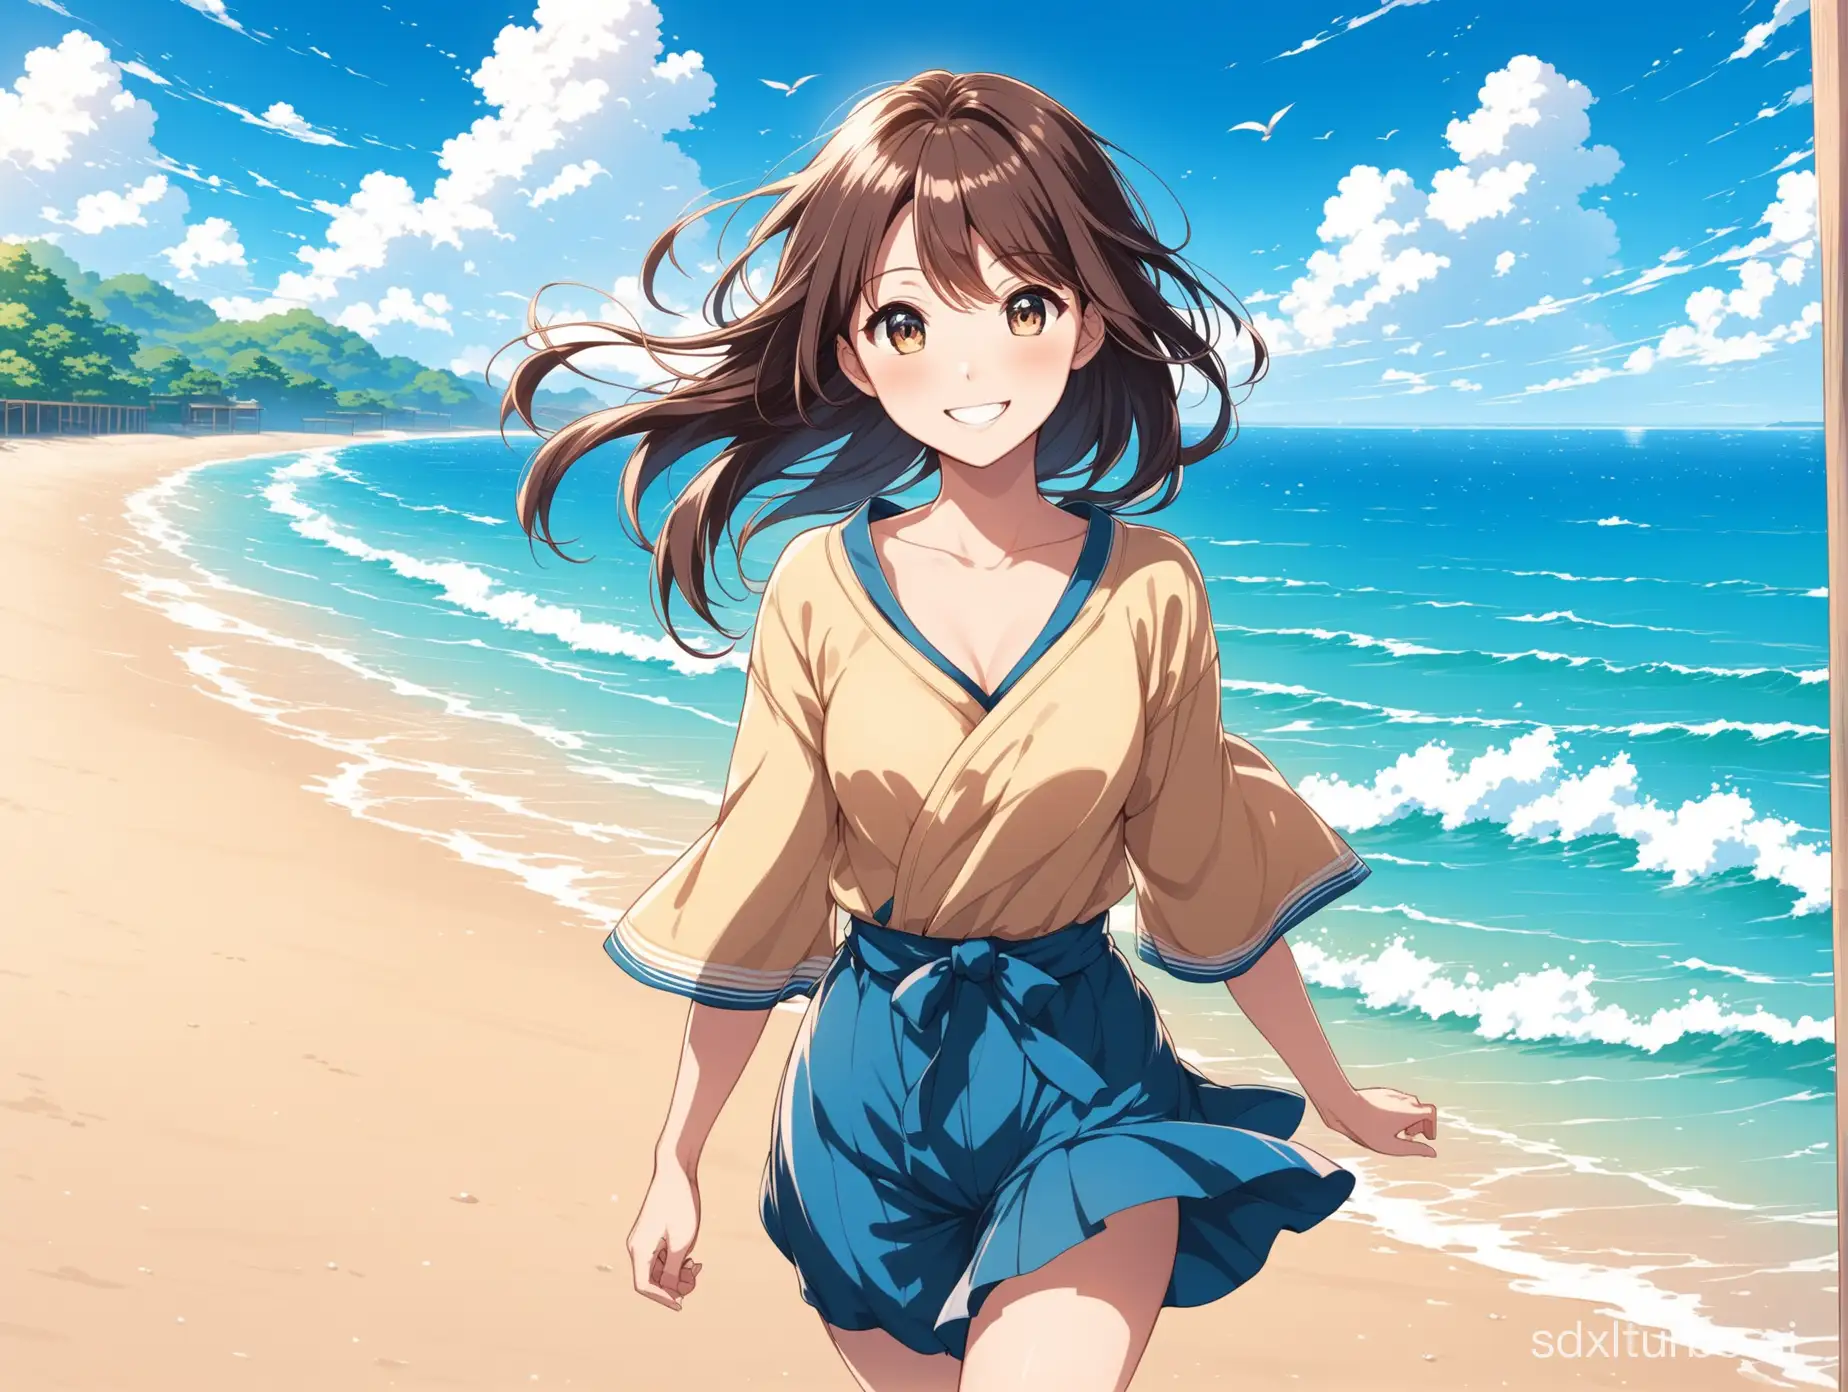 Smiling-Anime-Girl-Walking-on-Beach